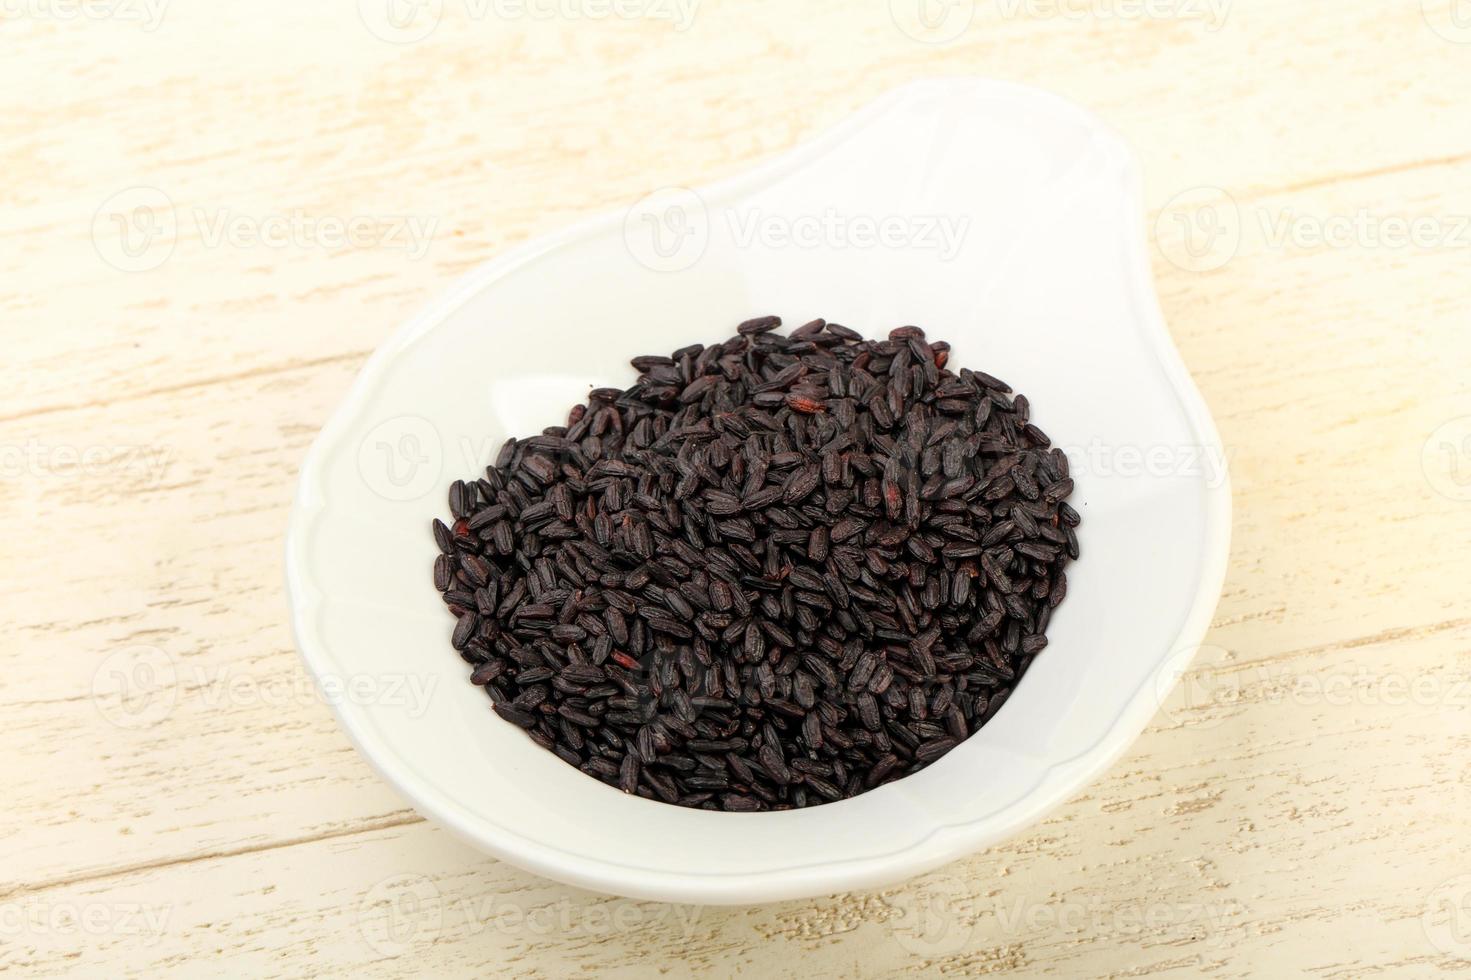 Black wild rice photo